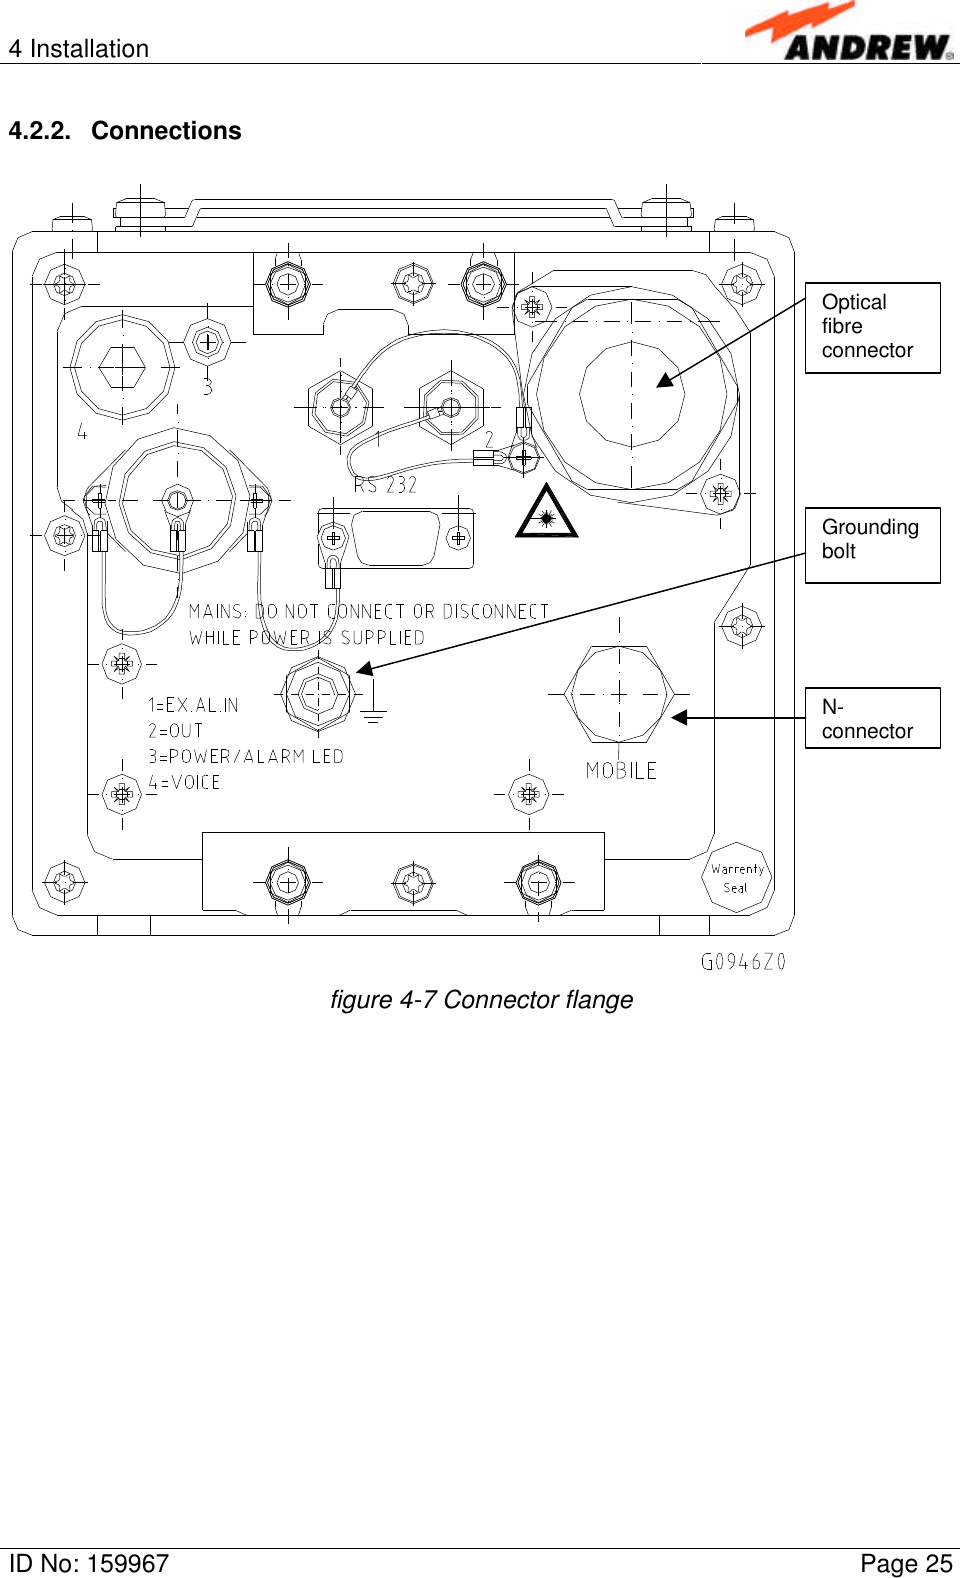 4 InstallationID No: 159967 Page 254.2.2. Connectionsfigure 4-7 Connector flangeOpticalfibreconnectorN-connectorGroundingbolt